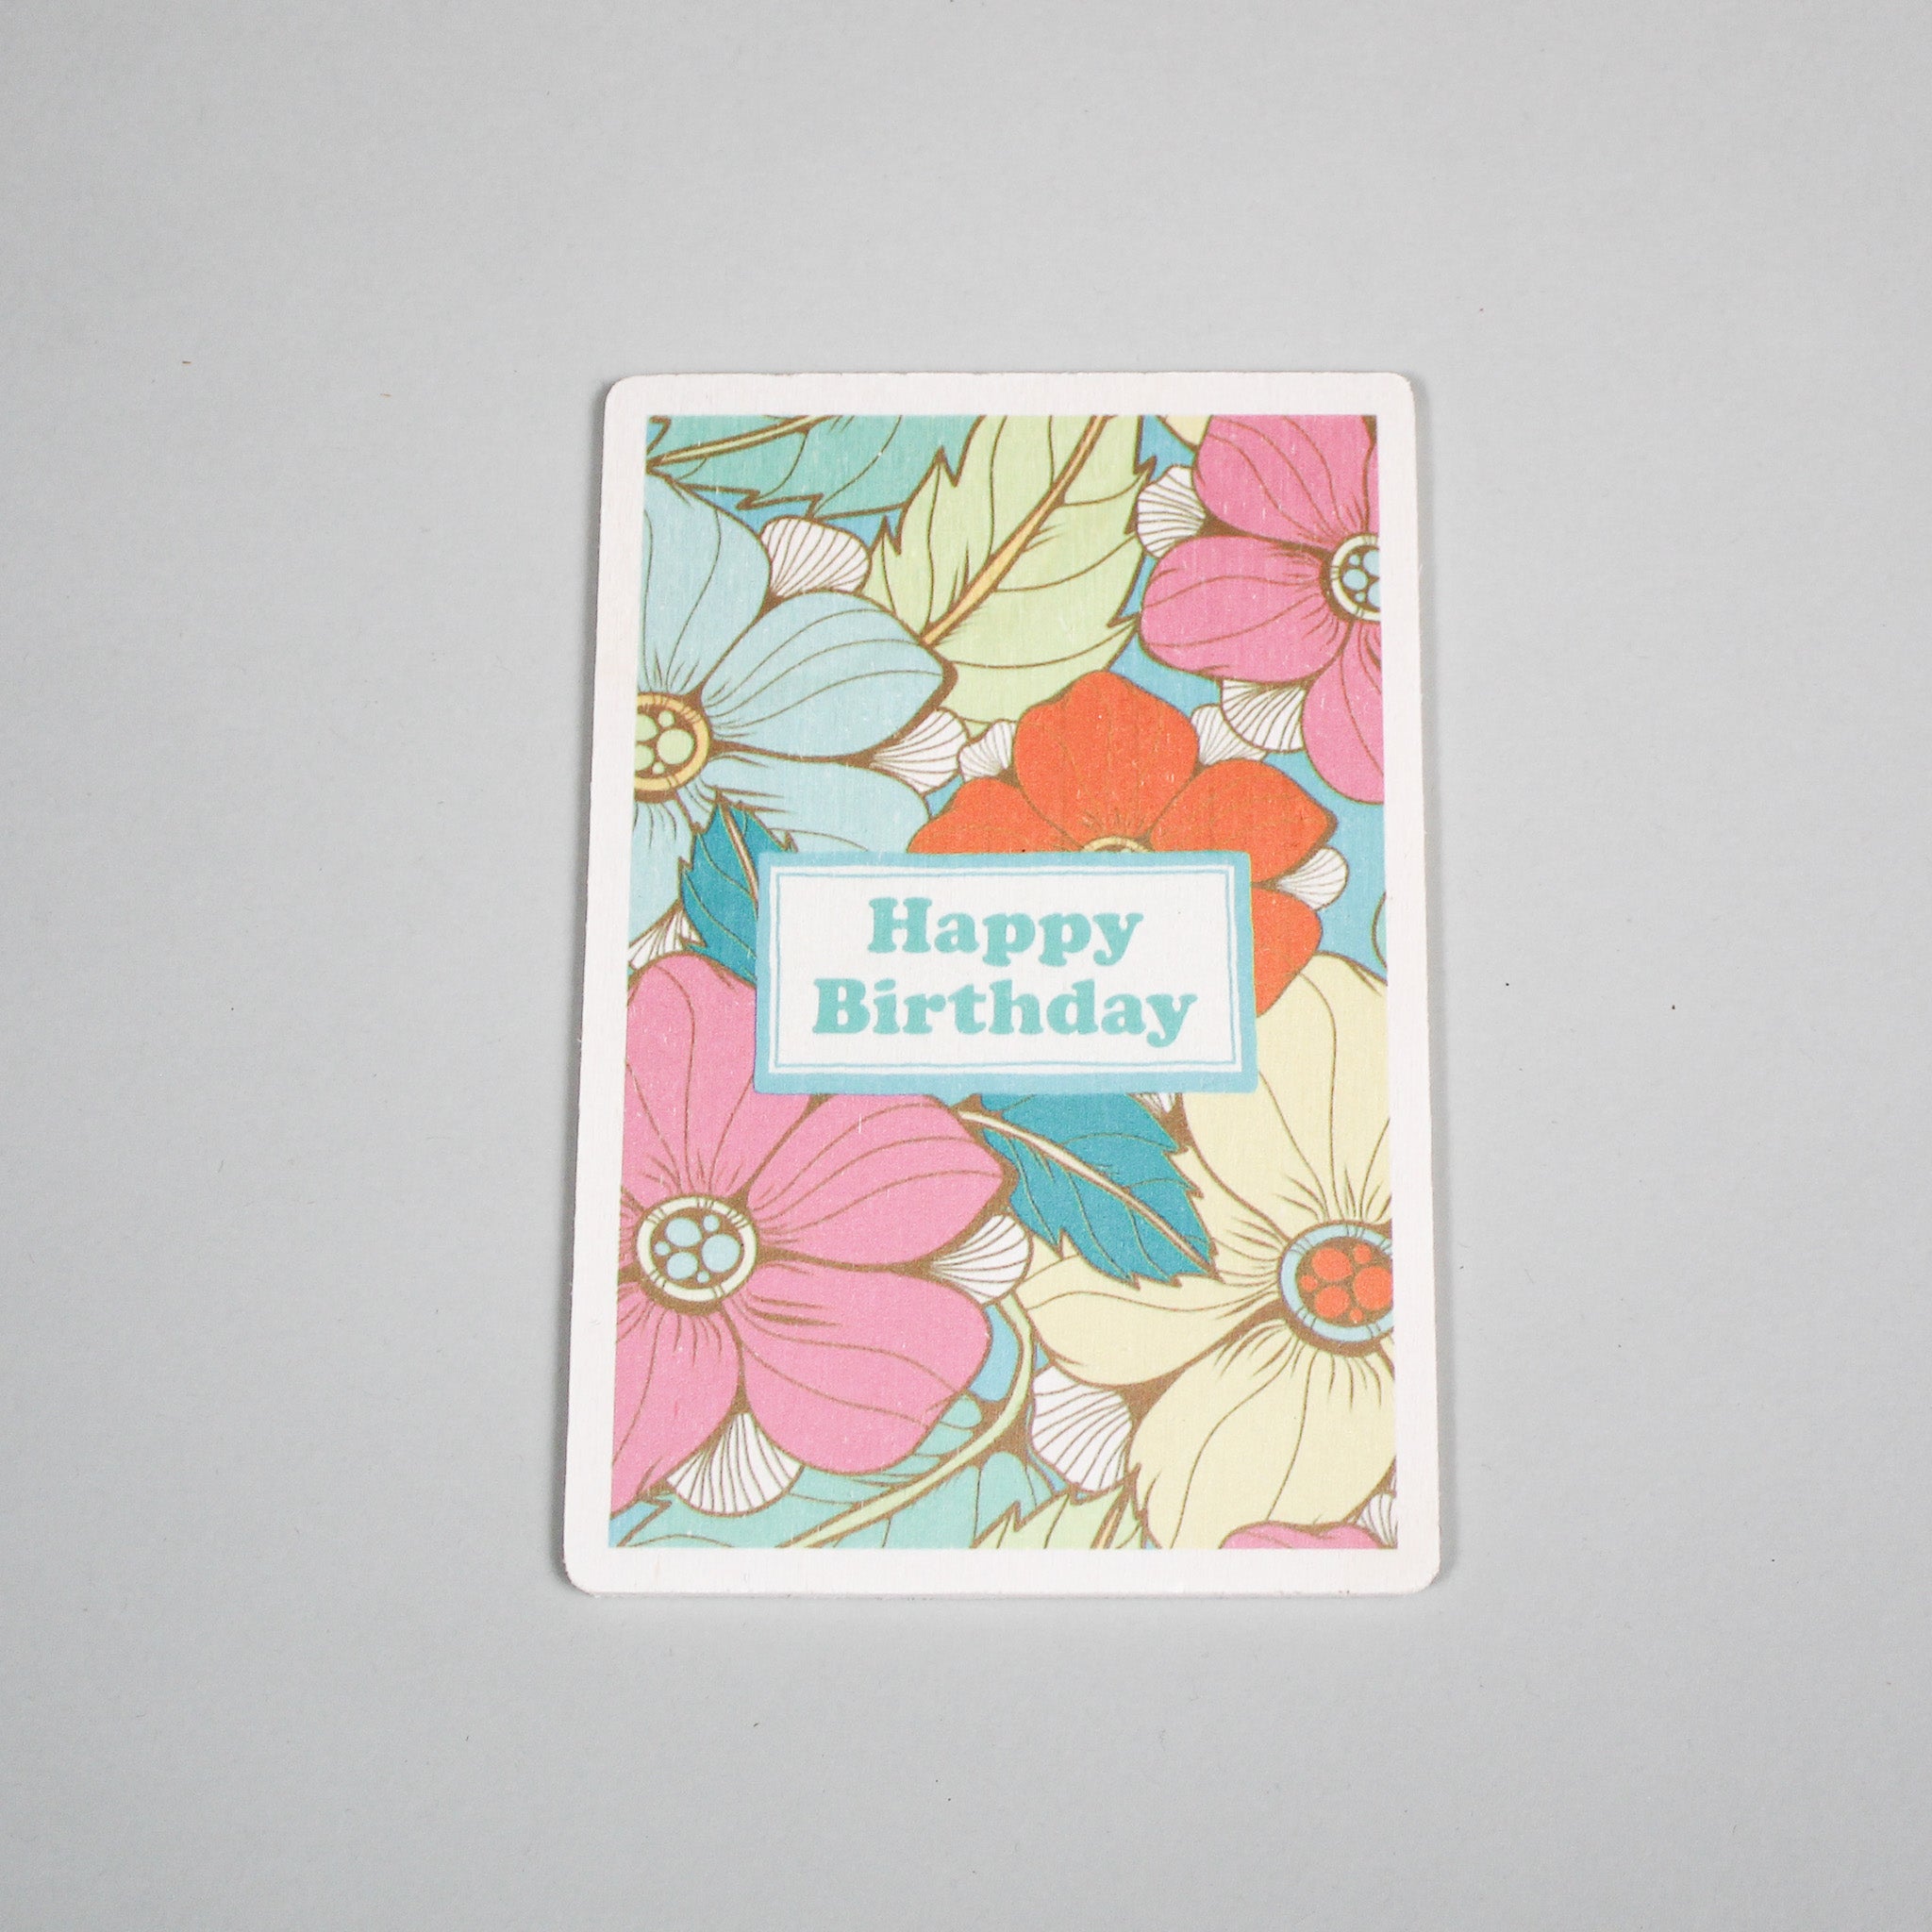 "Happy Birthday" Wooden Postcard - Retro Flowers